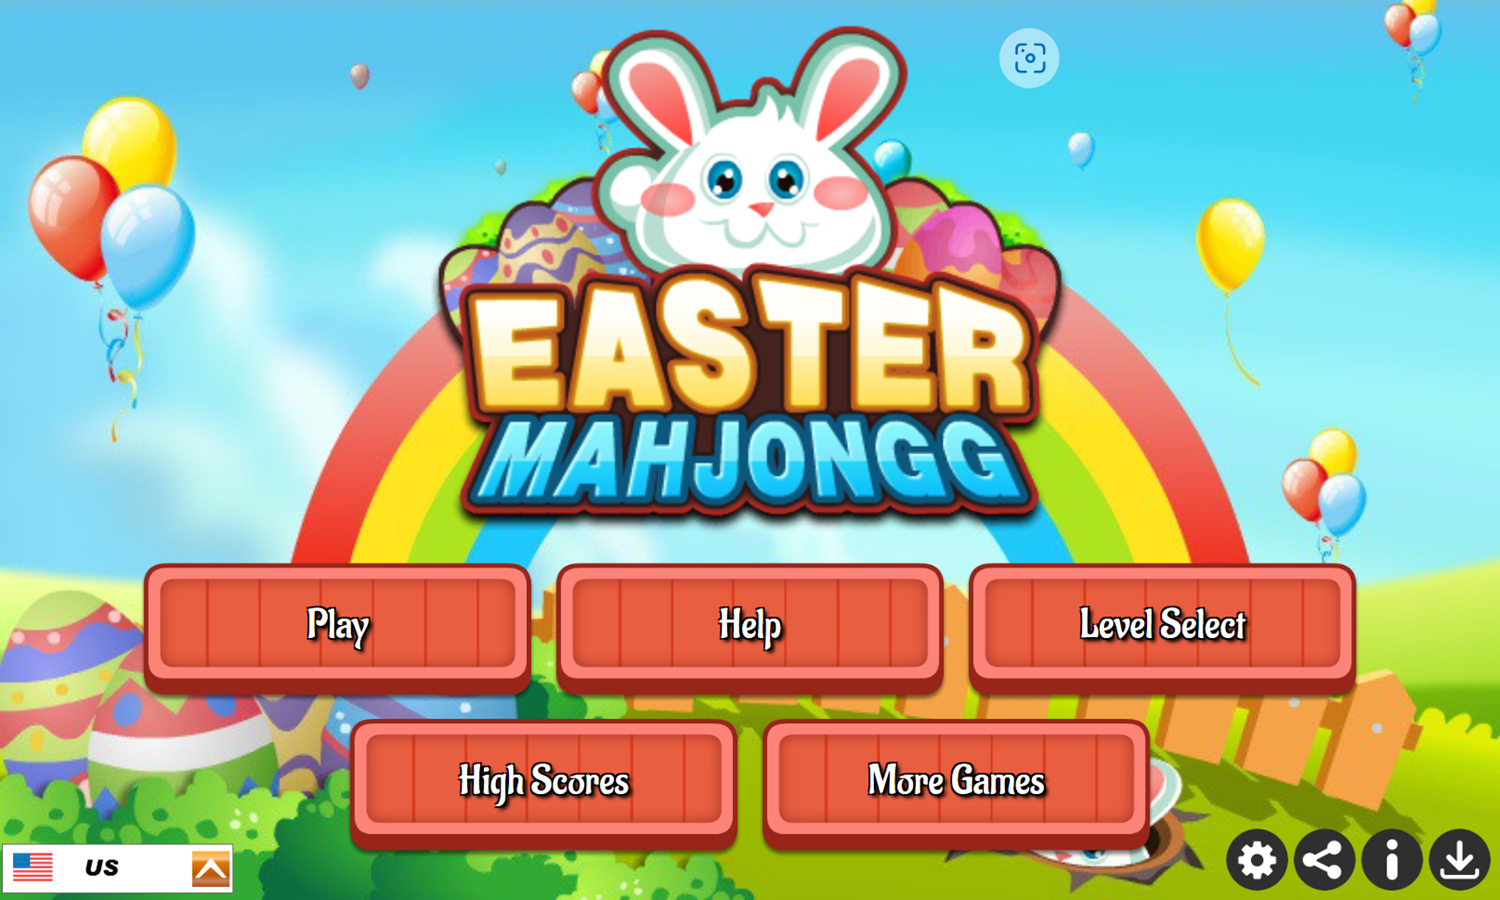 Easter Mahjongg Game Welcome Screen Screenshot.